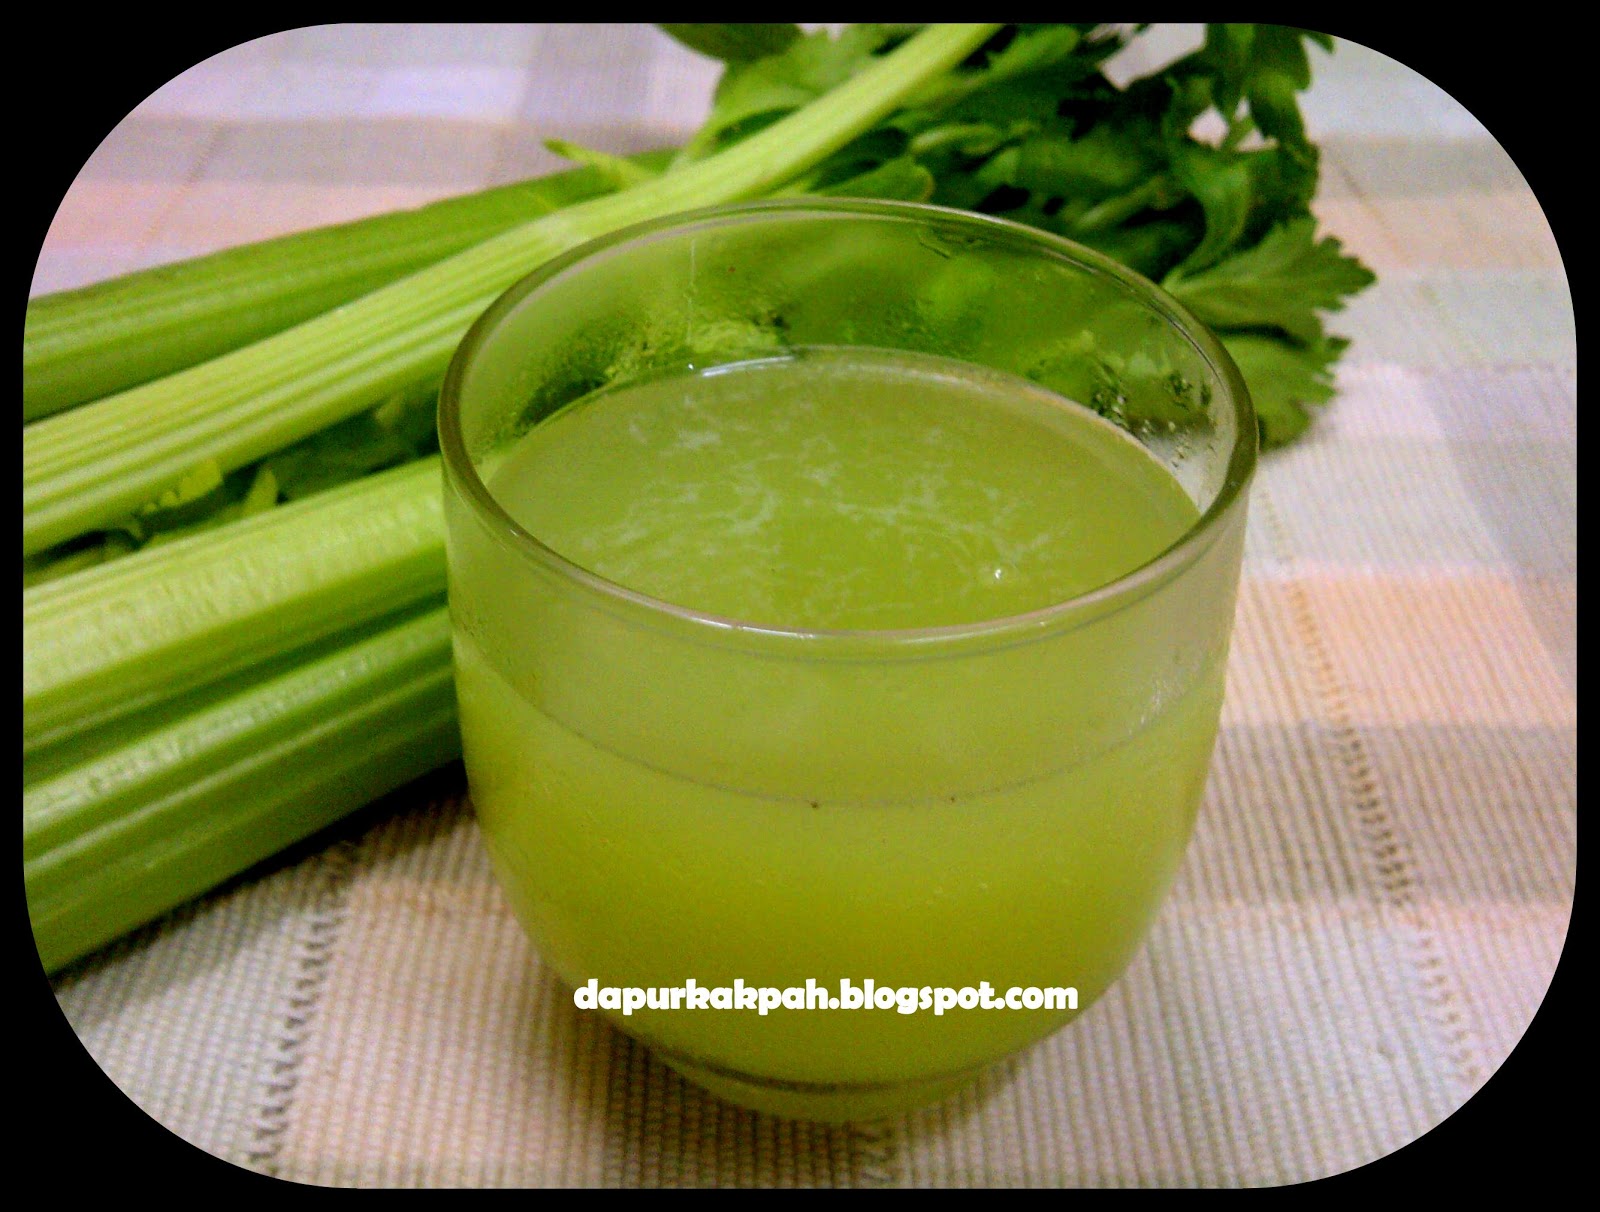 Dapur Kak Pah: Apple Celery Juice